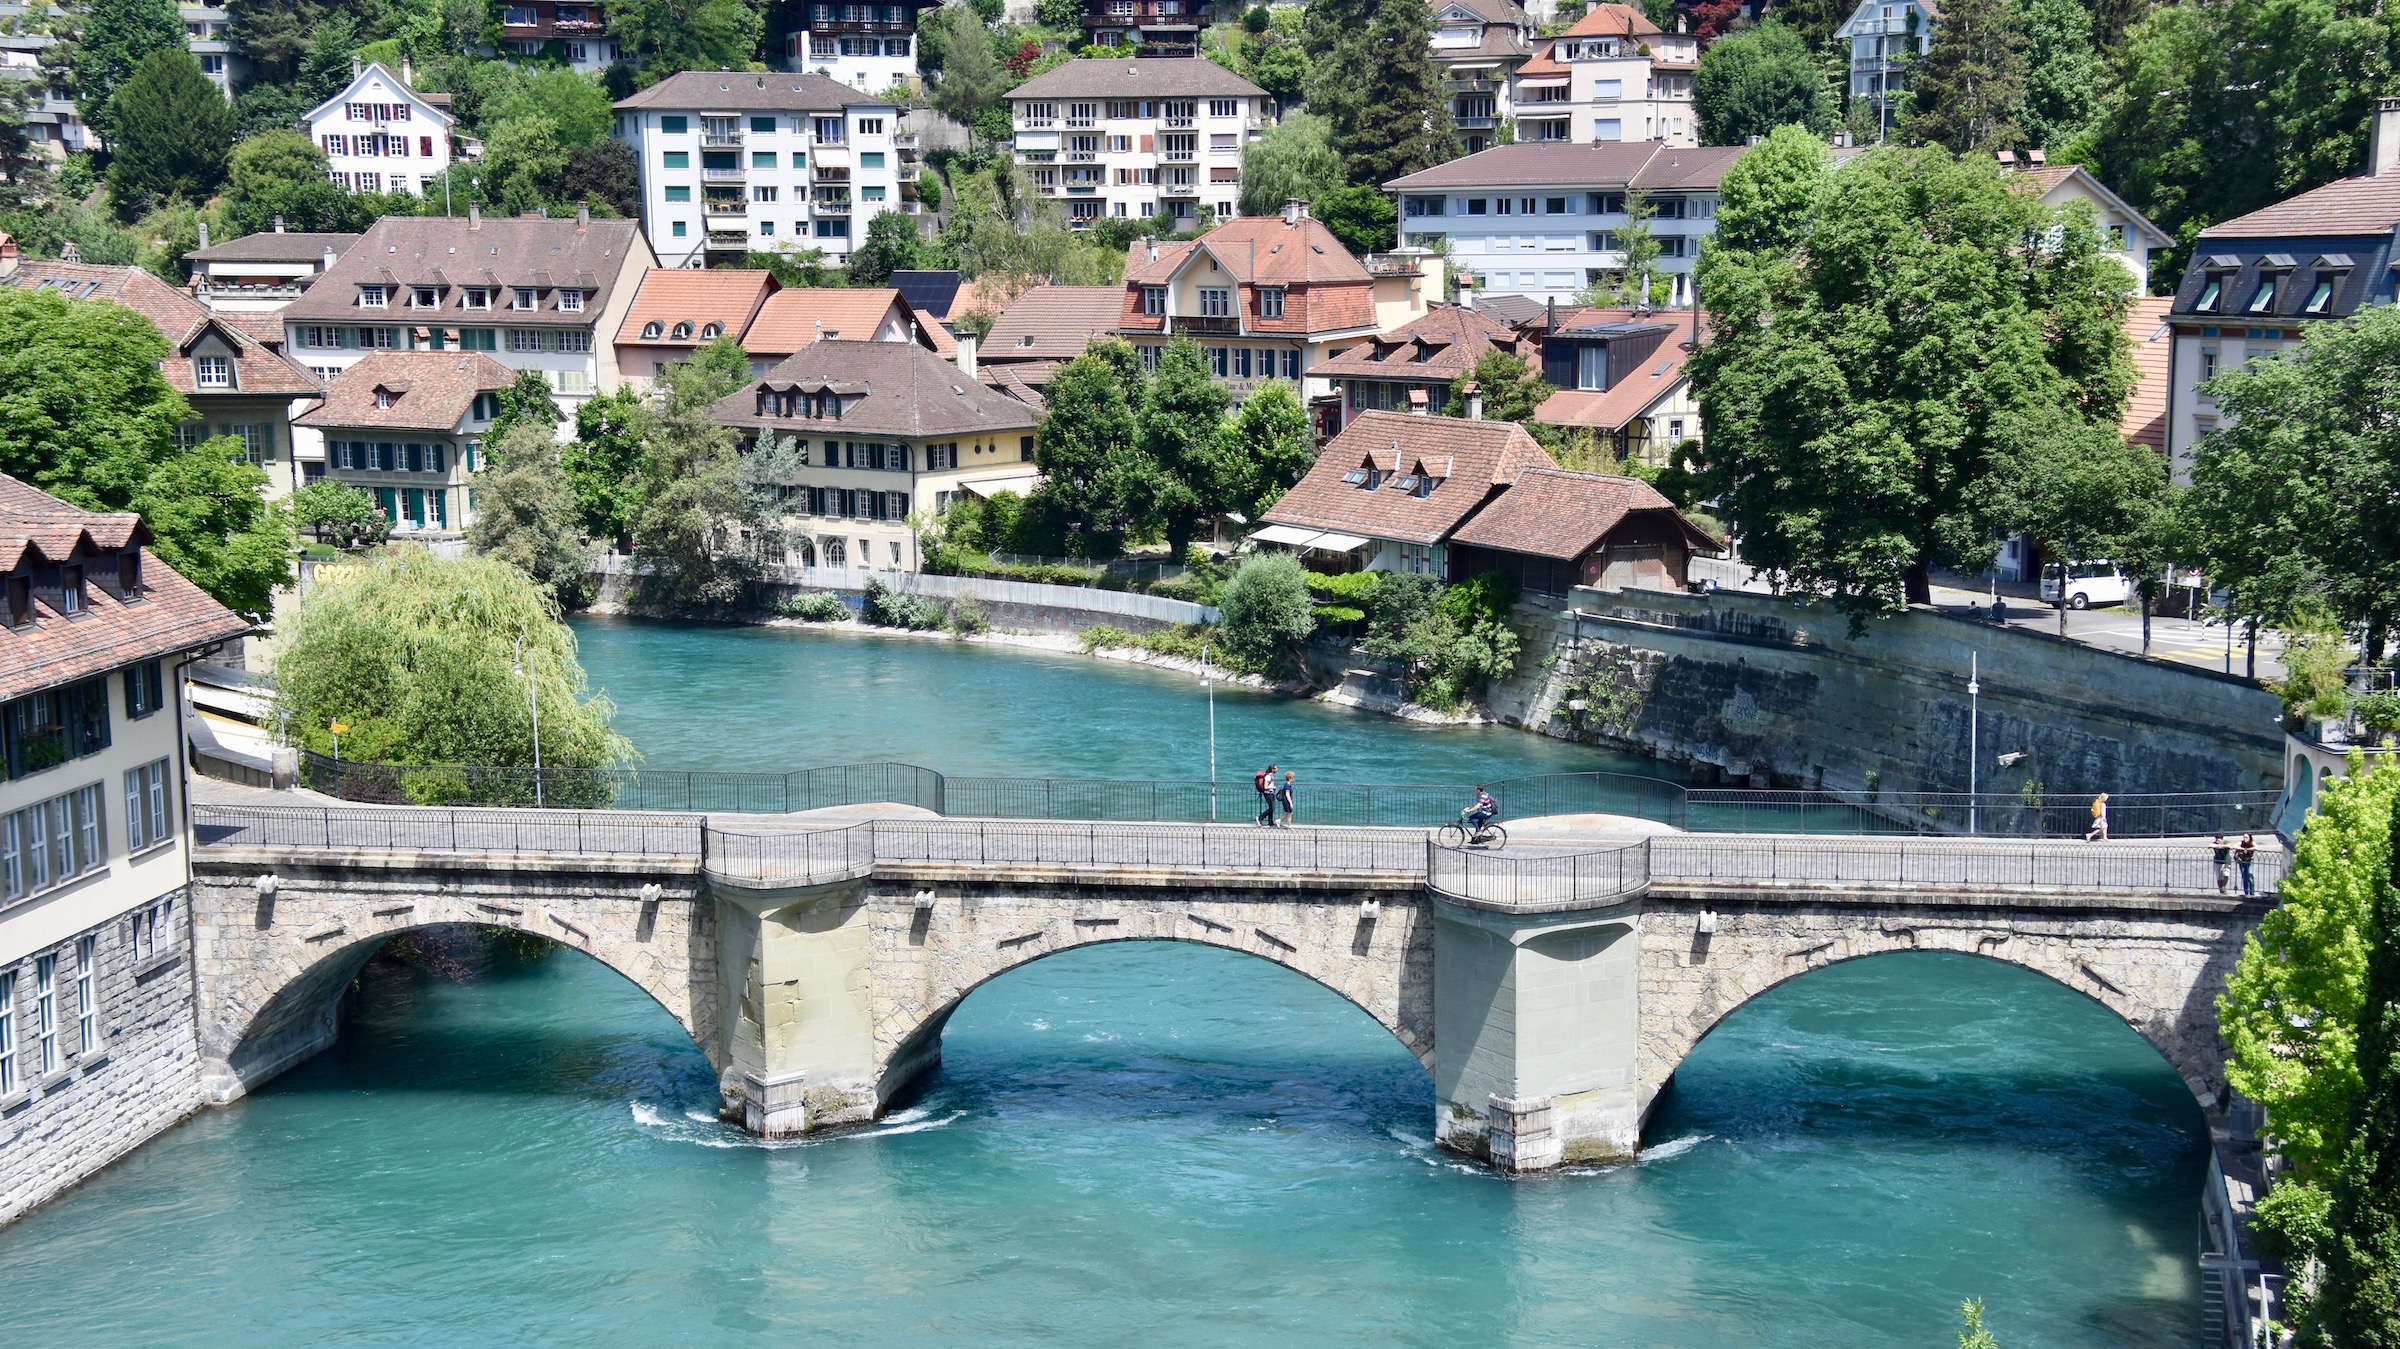 Lower Bridge of Bern